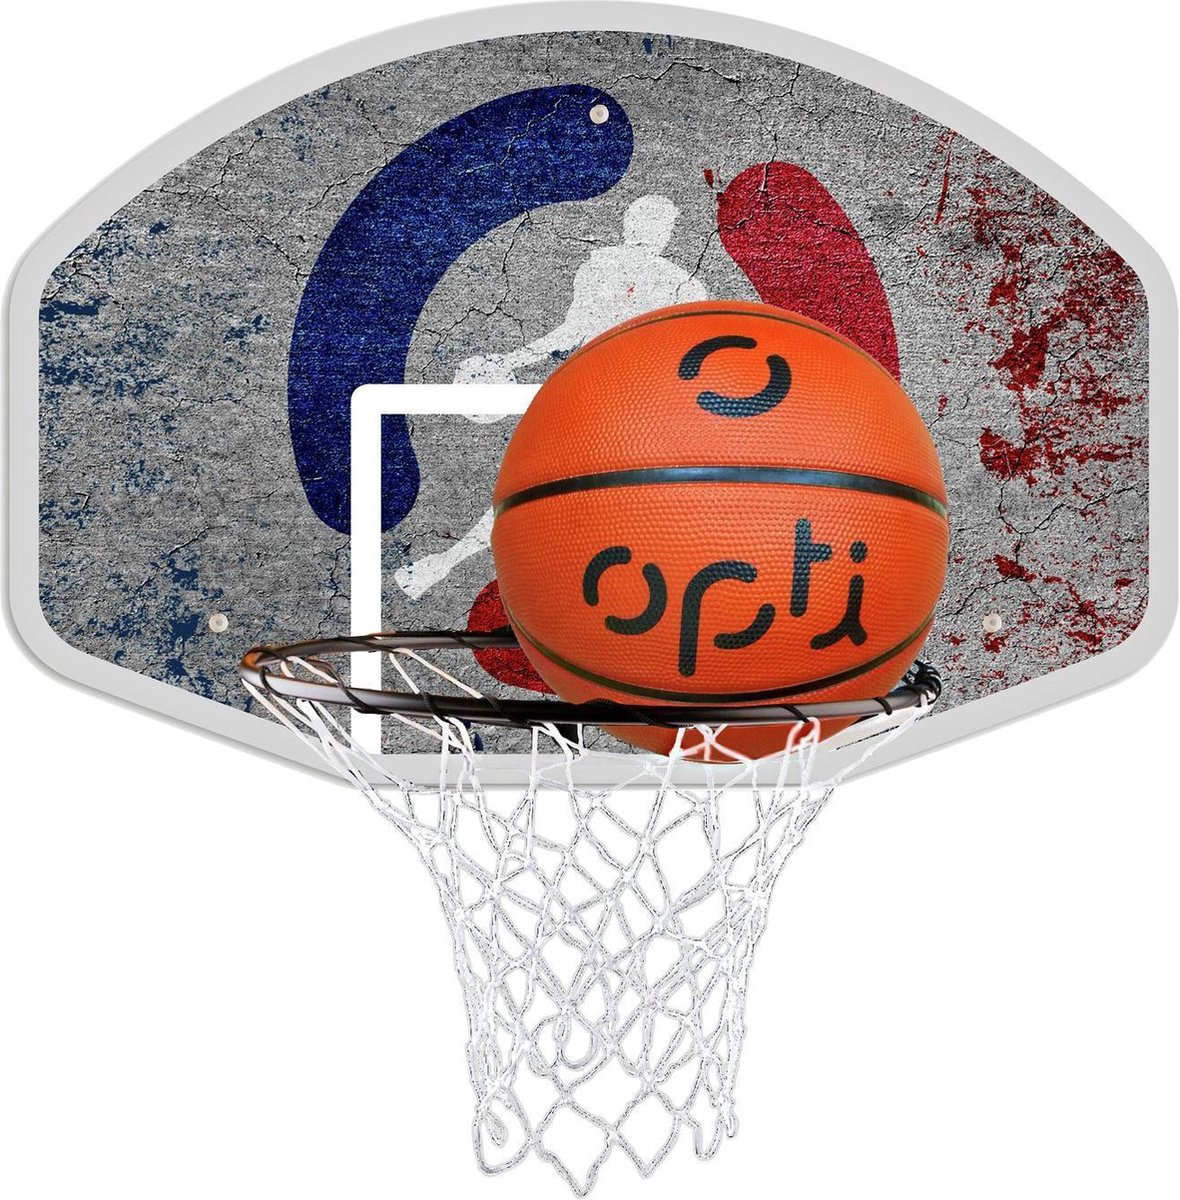 Opti Basketball Ring Board and Ball | basketring met net bord en basketbal - Opti